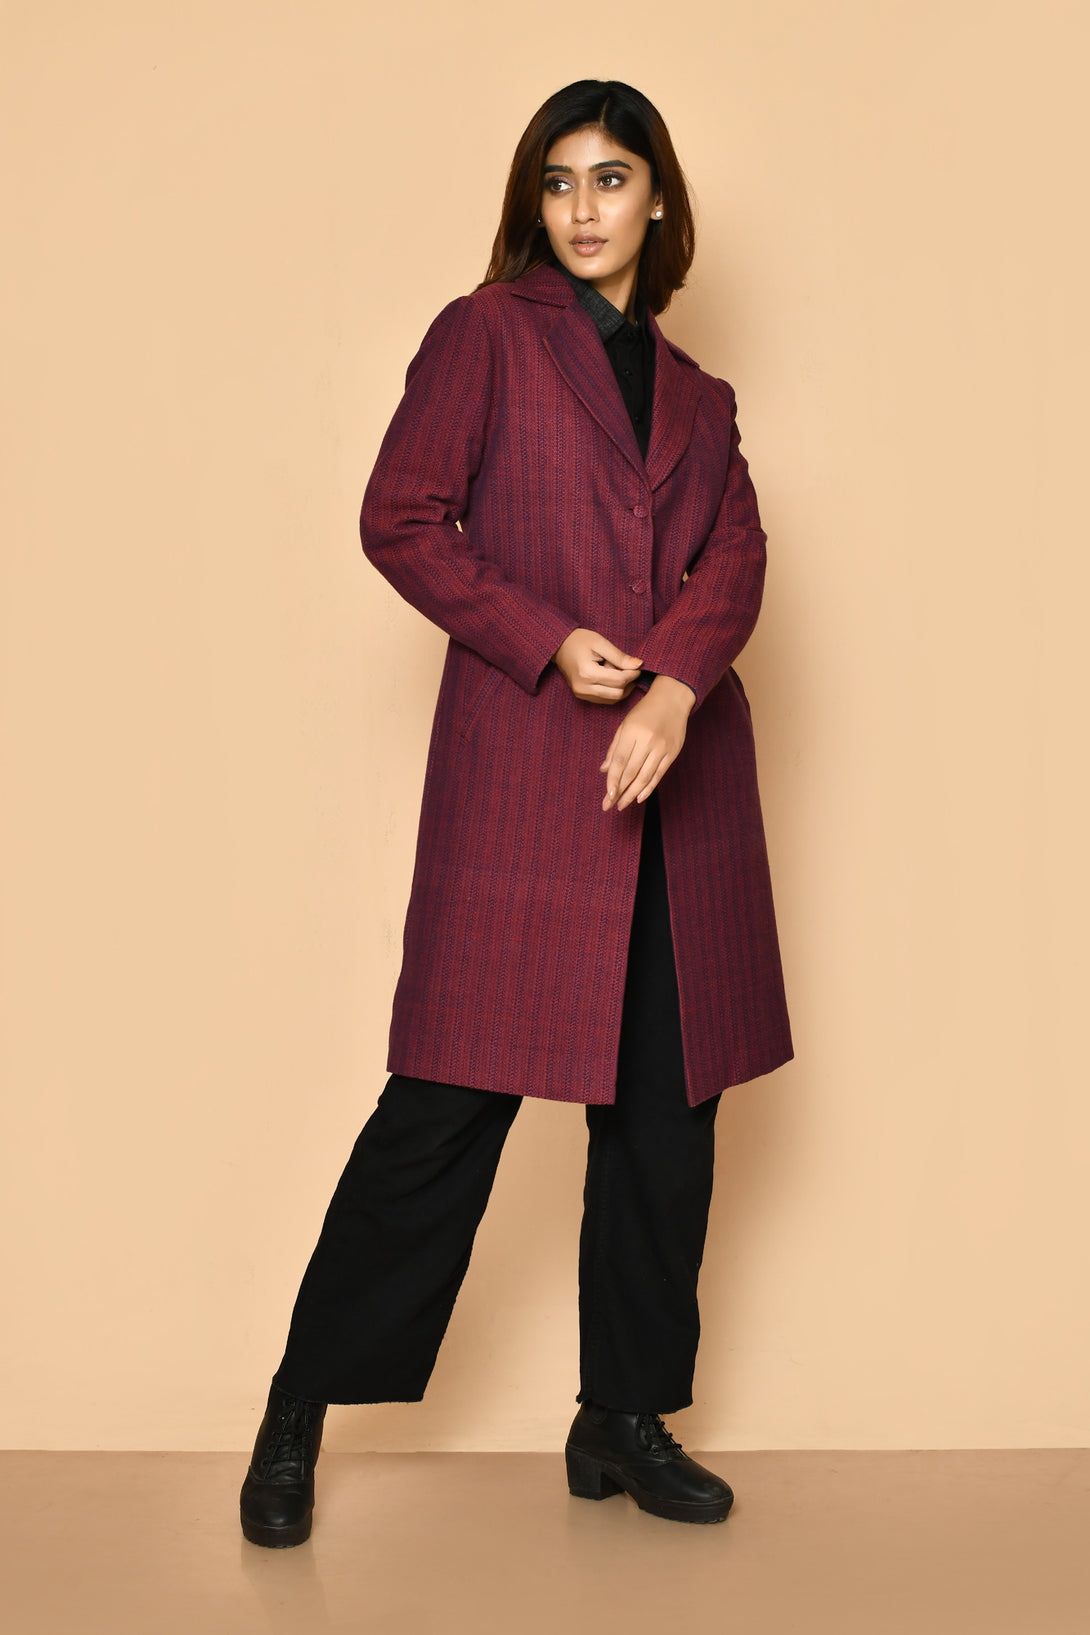 Premium quality handloom long cotton jacket , perfect for elegant office wear